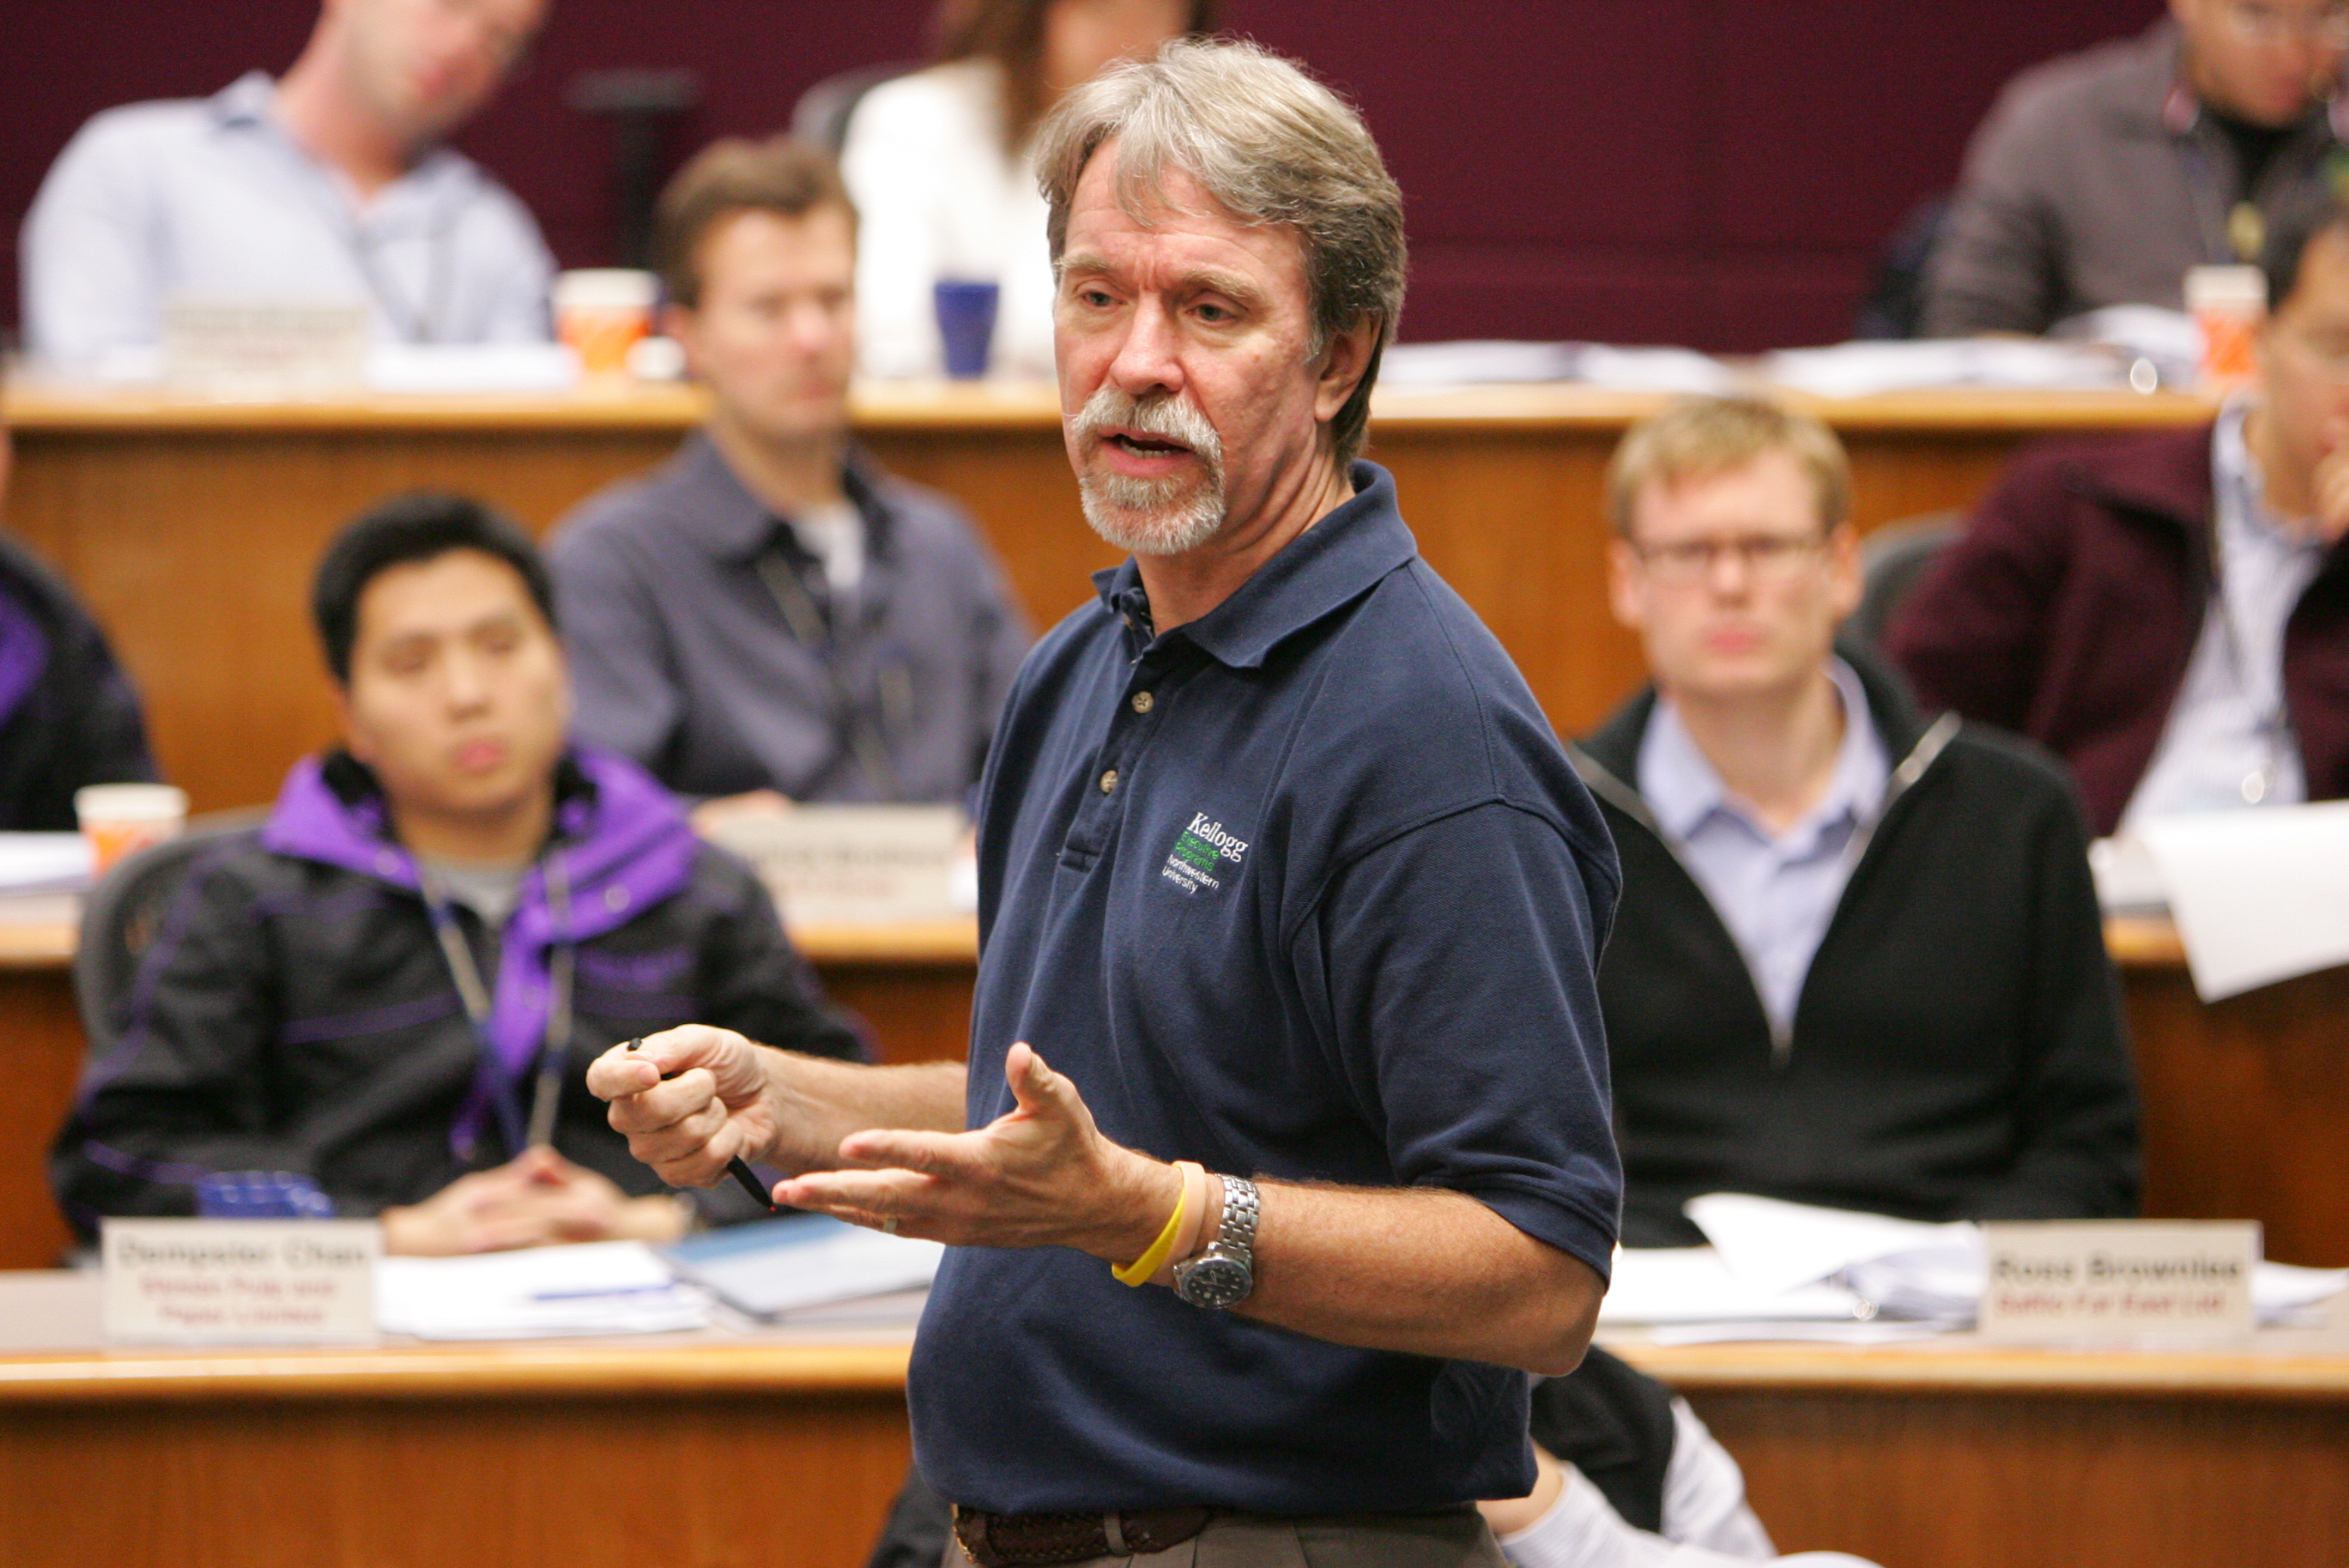 Northwestern University's Kellogg School of Management Professor Keith Murnighan lectures in class.